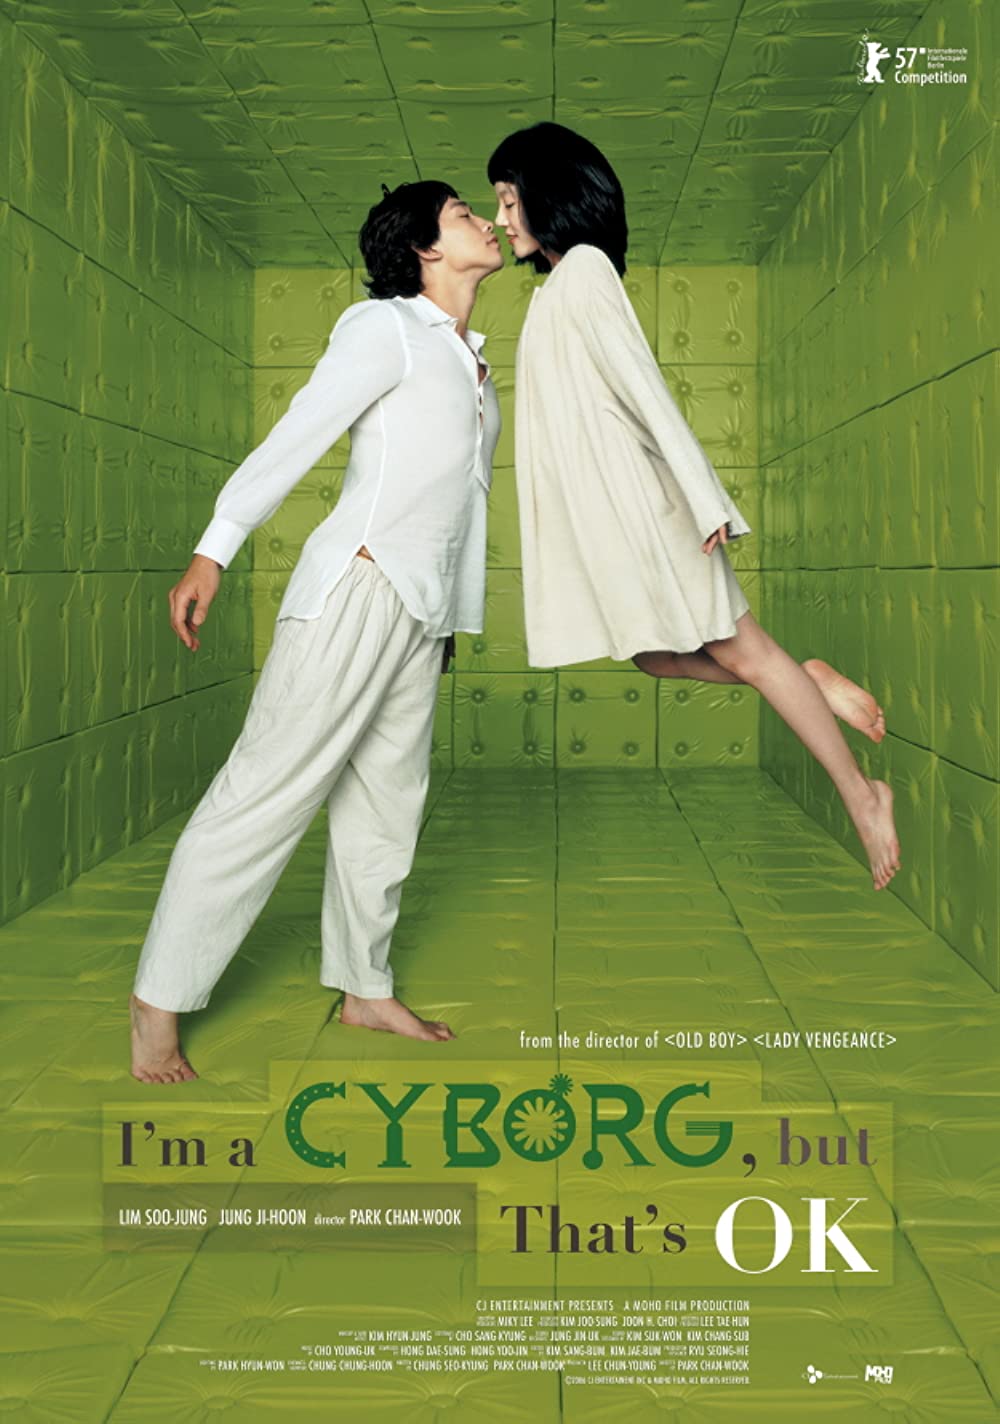 Filmbeschreibung zu I'm a Cyborg, but that's ok (OV)